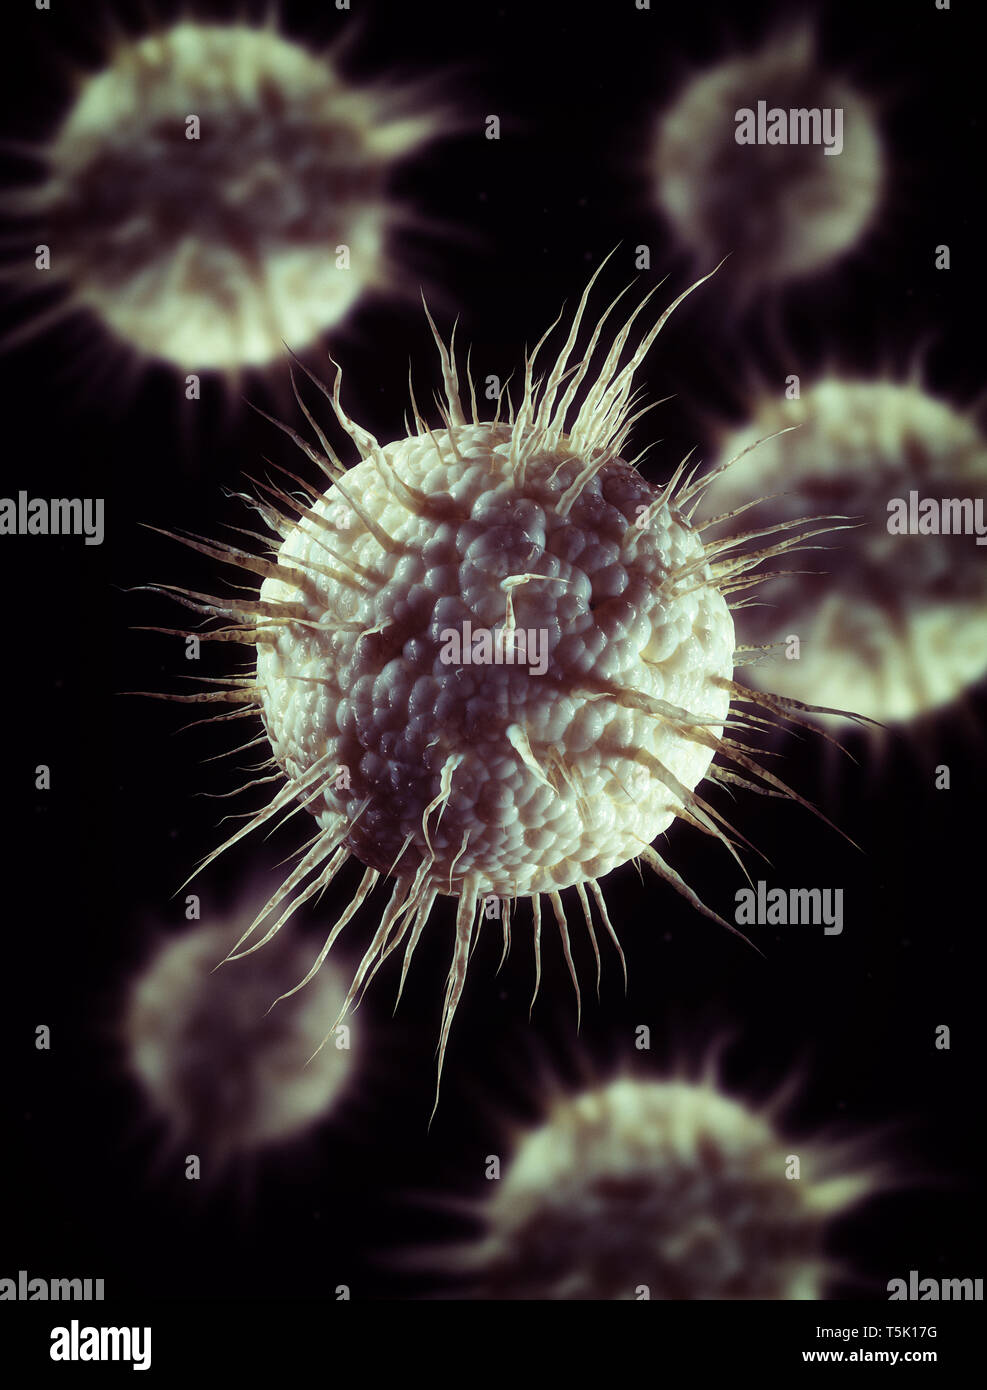 Conceptual 3d illustration of virus cells Stock Photo